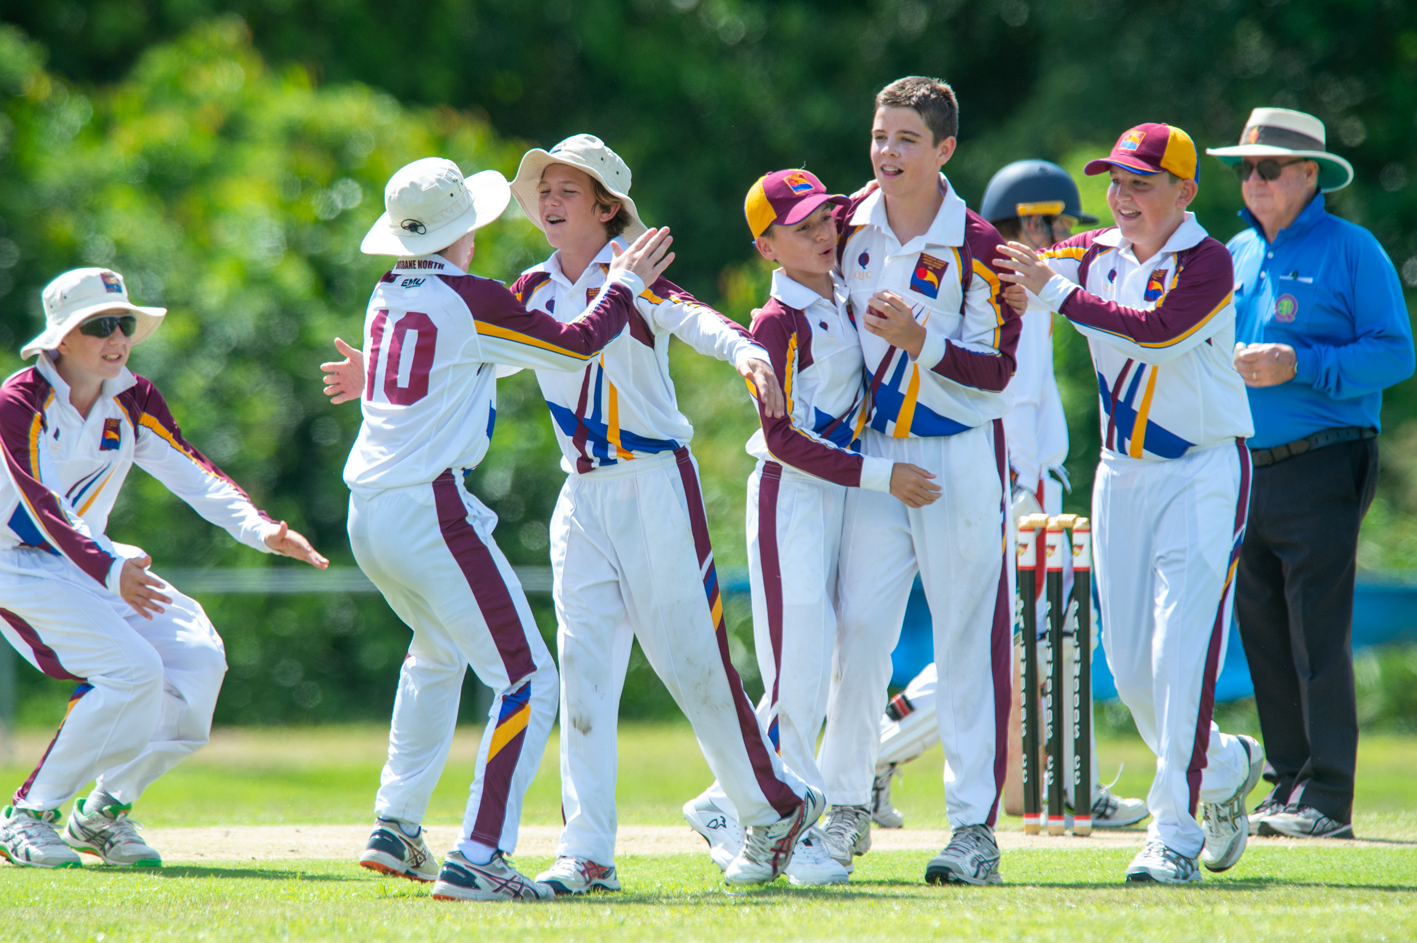 Many talented players amid Sunshine Coast junior cricket